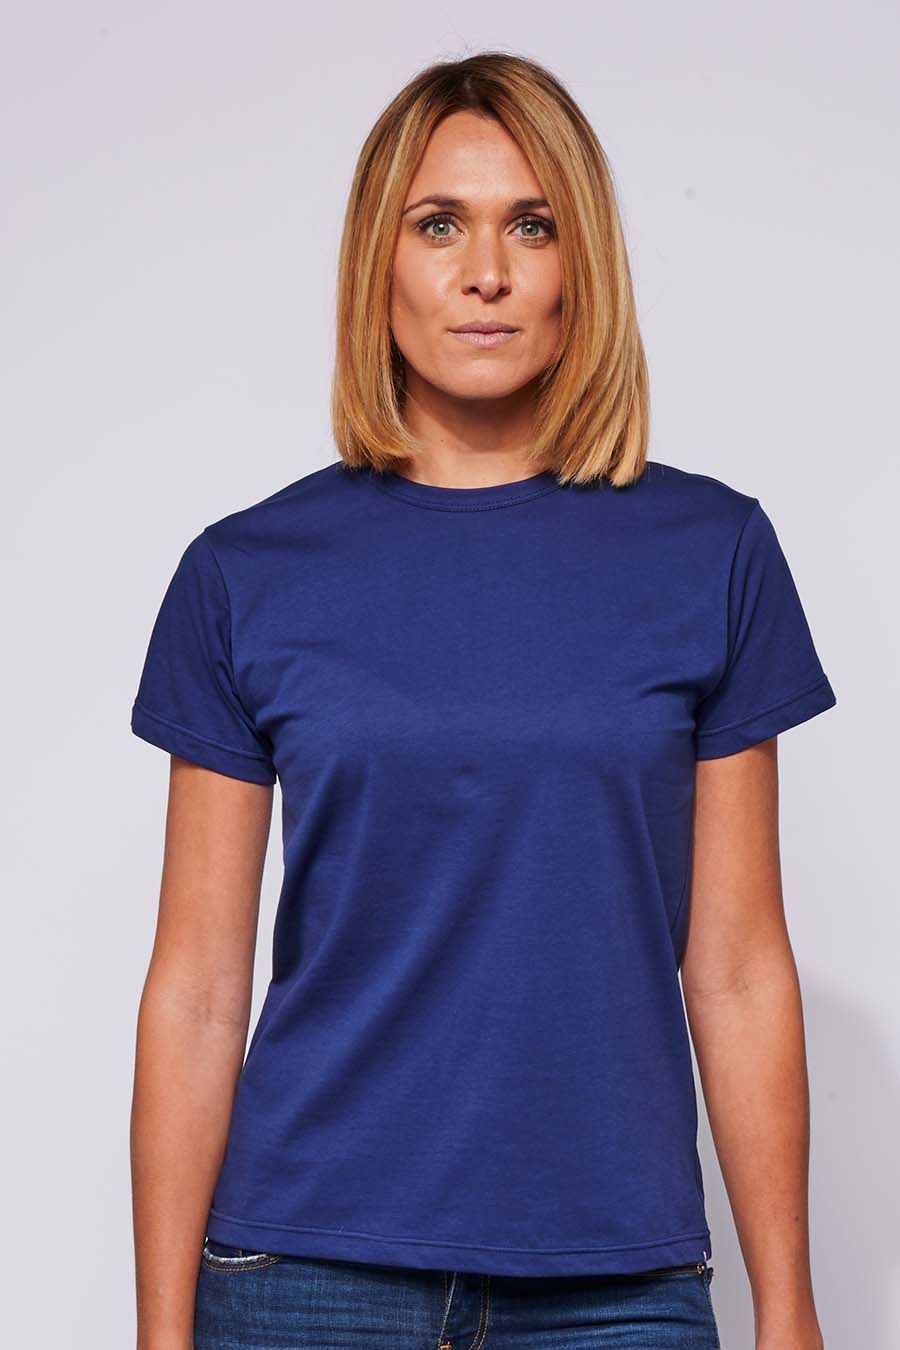 Tee-shirt Femme made in France en coton bio BEATRICE marine - FIL ROUGE